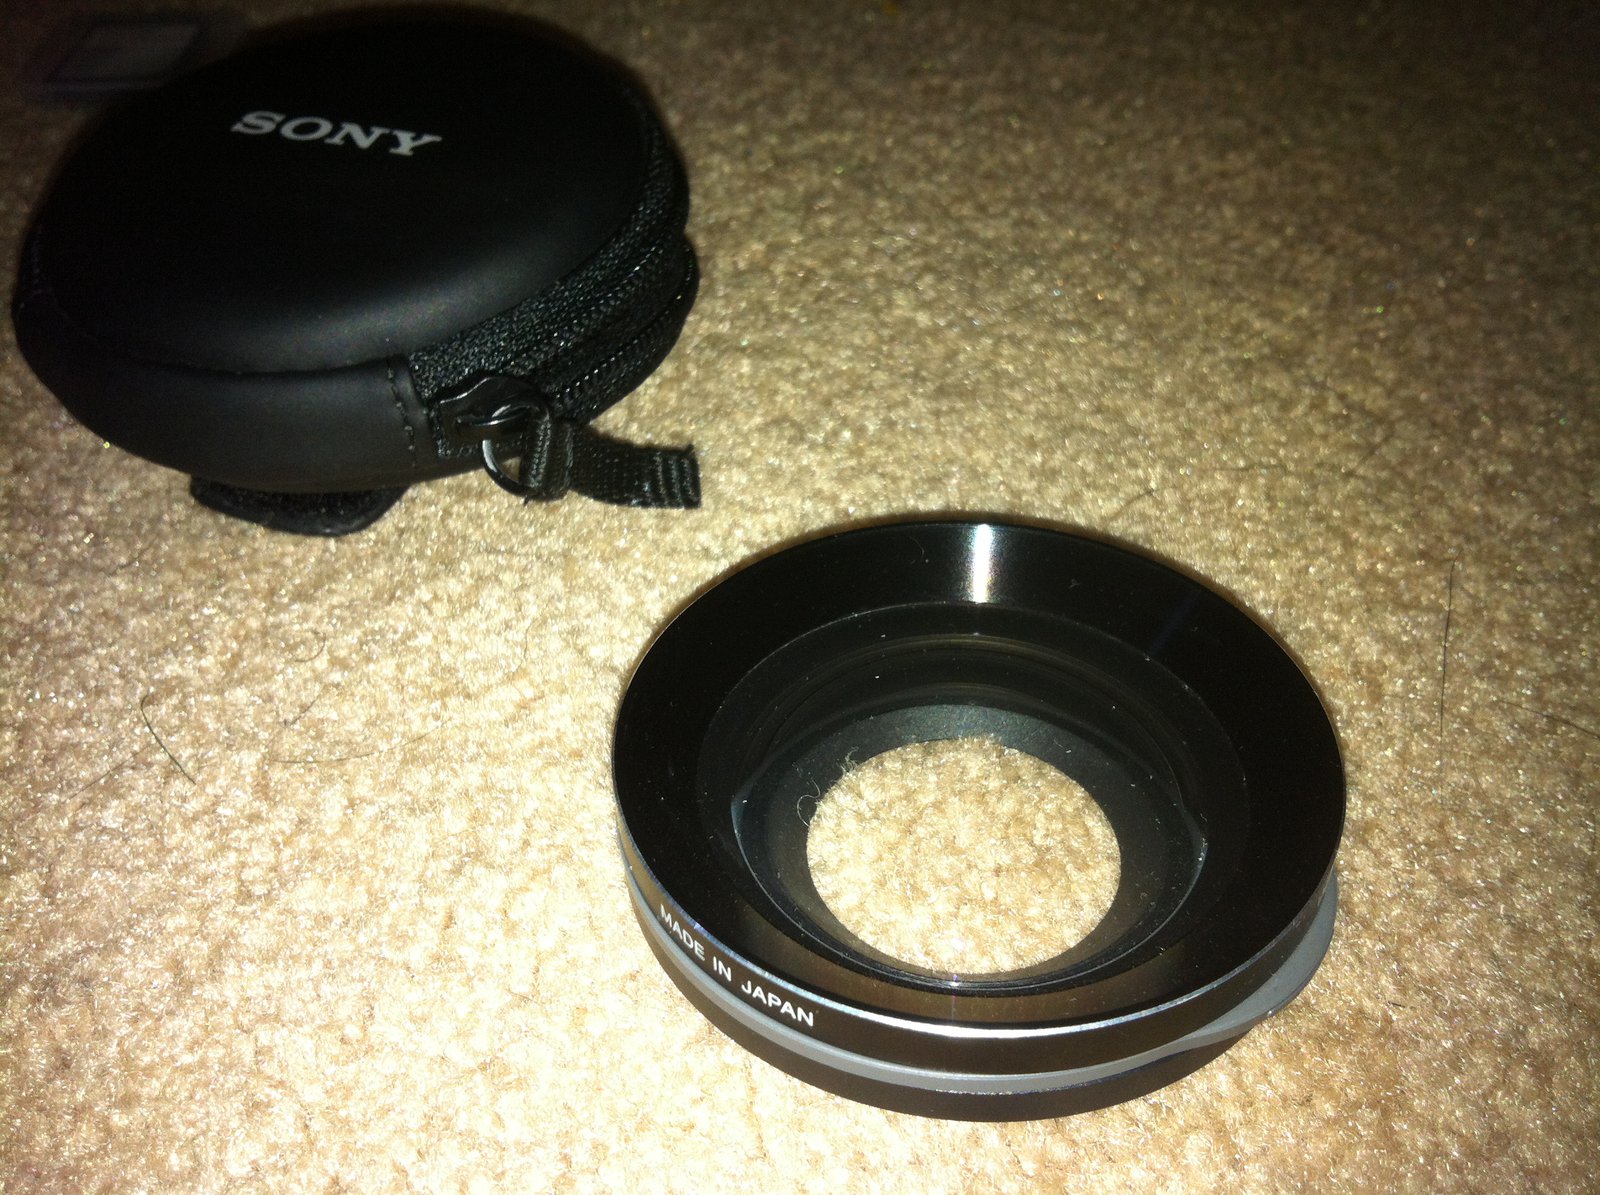 Sony HDR-CX 110 w accessories - $350